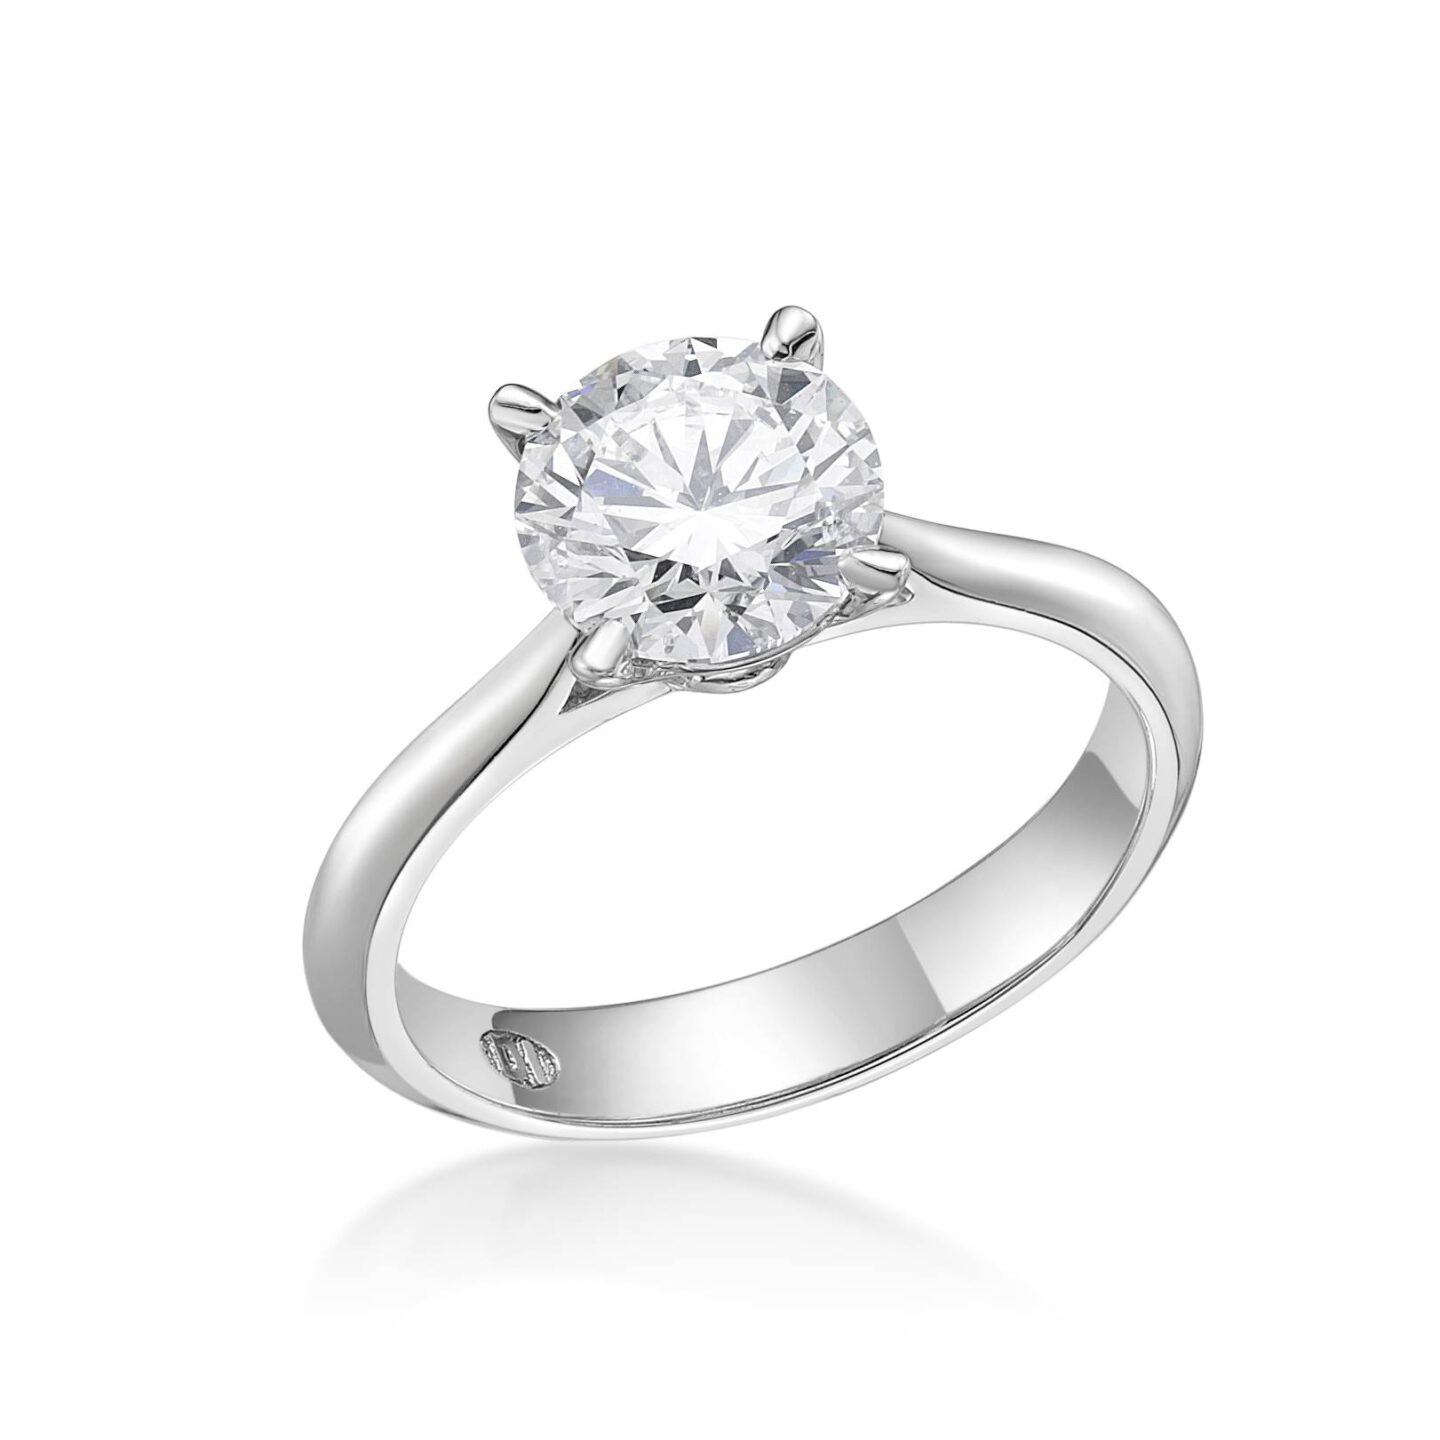 Zora – Round Brilliant Cut Diamond Engagement Ring